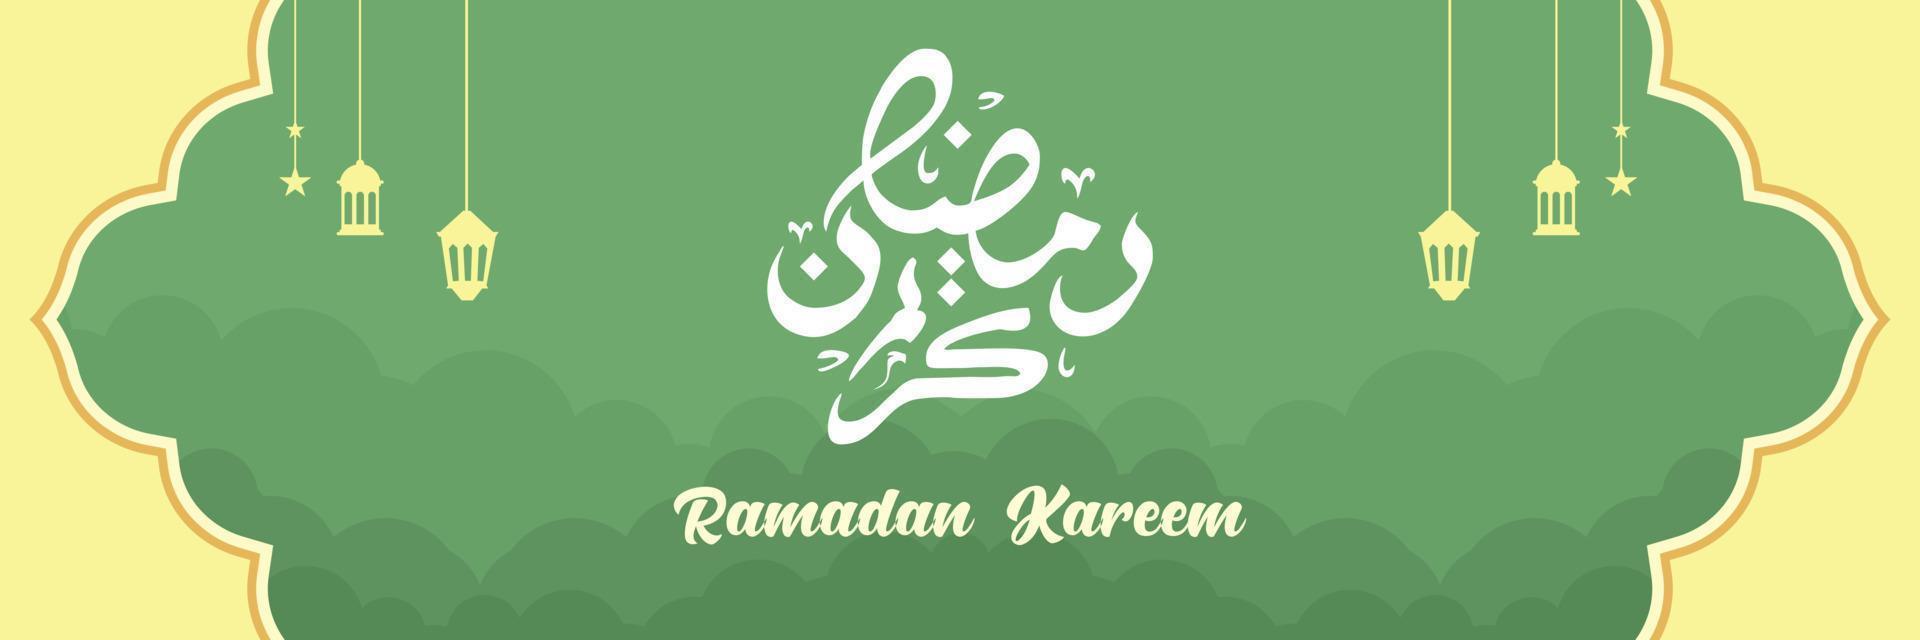 Ramadan kareem bannière avec arabe calligraphie vecteur